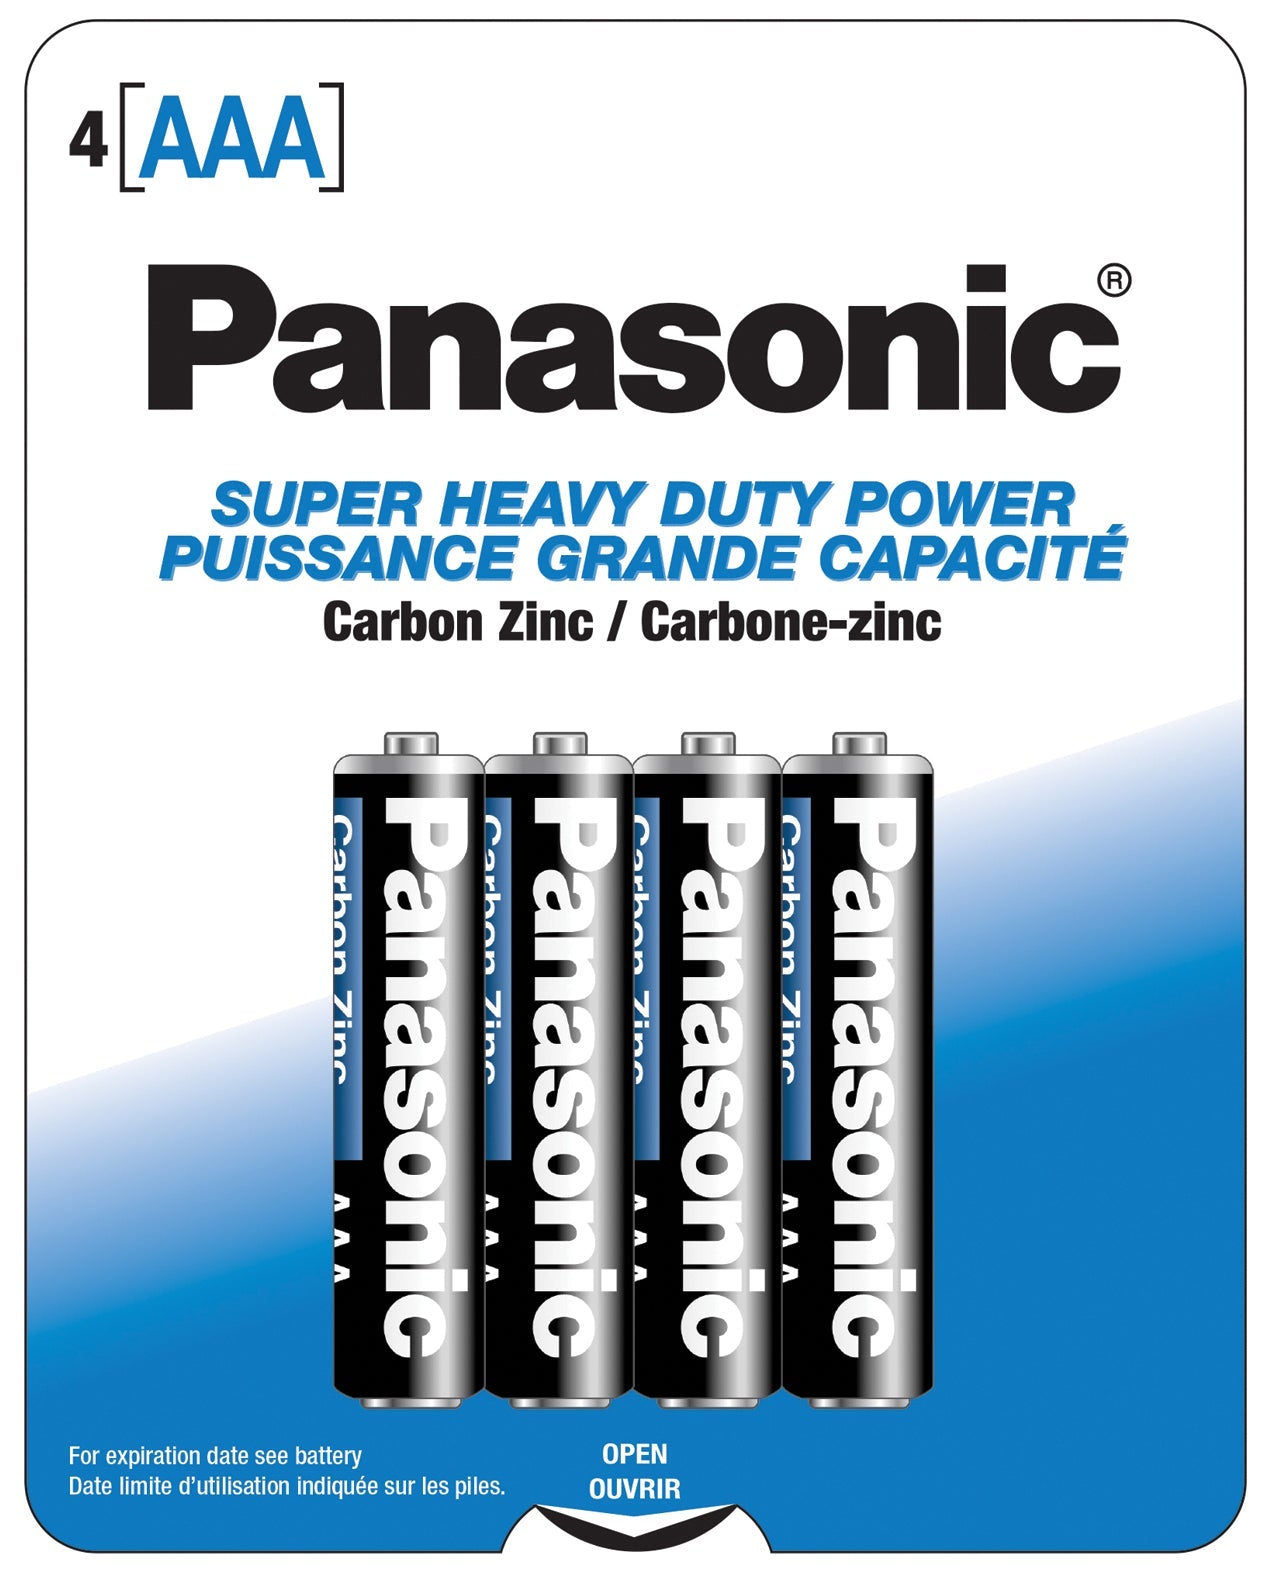 Panasonic Super Heavy Duty Battery AAA - Pack of 4